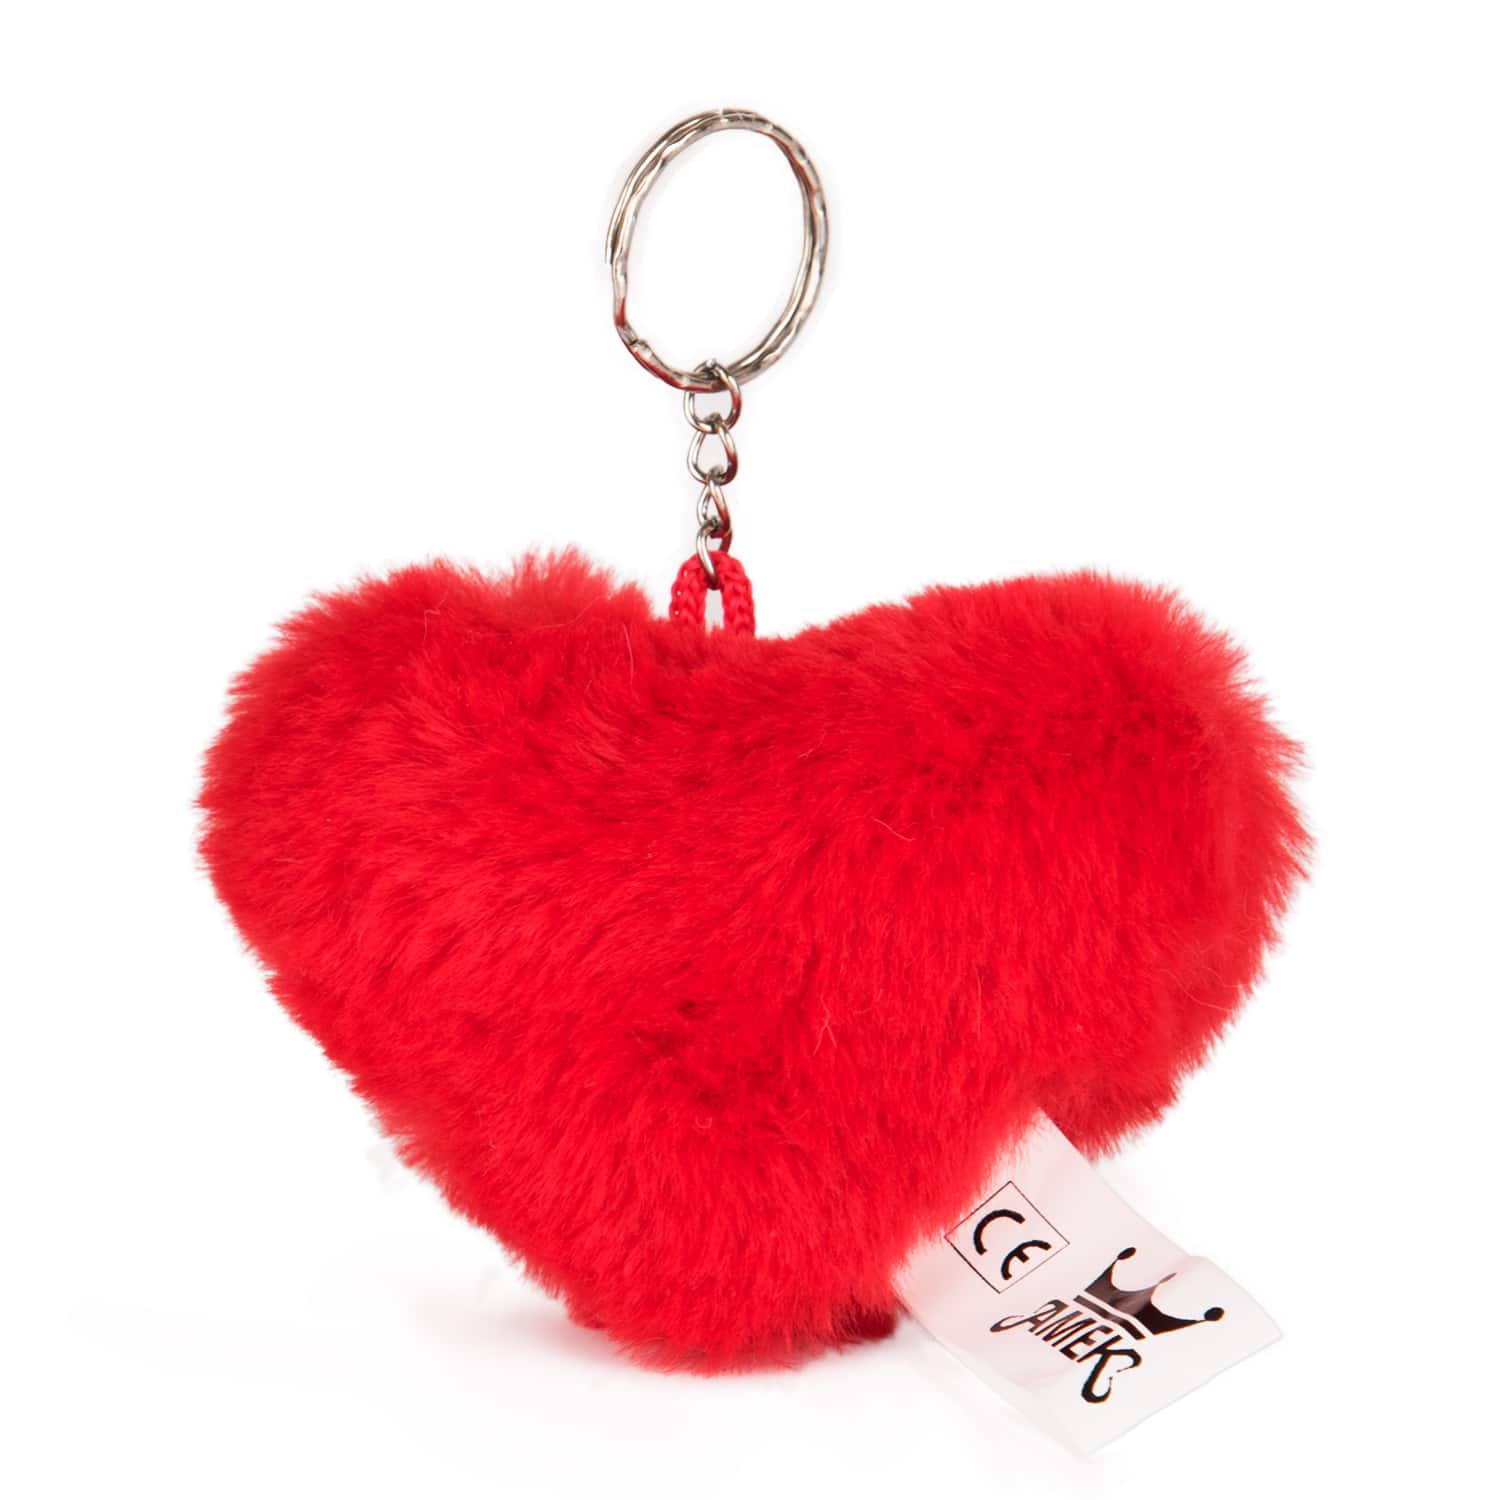 Heart keychain - Red